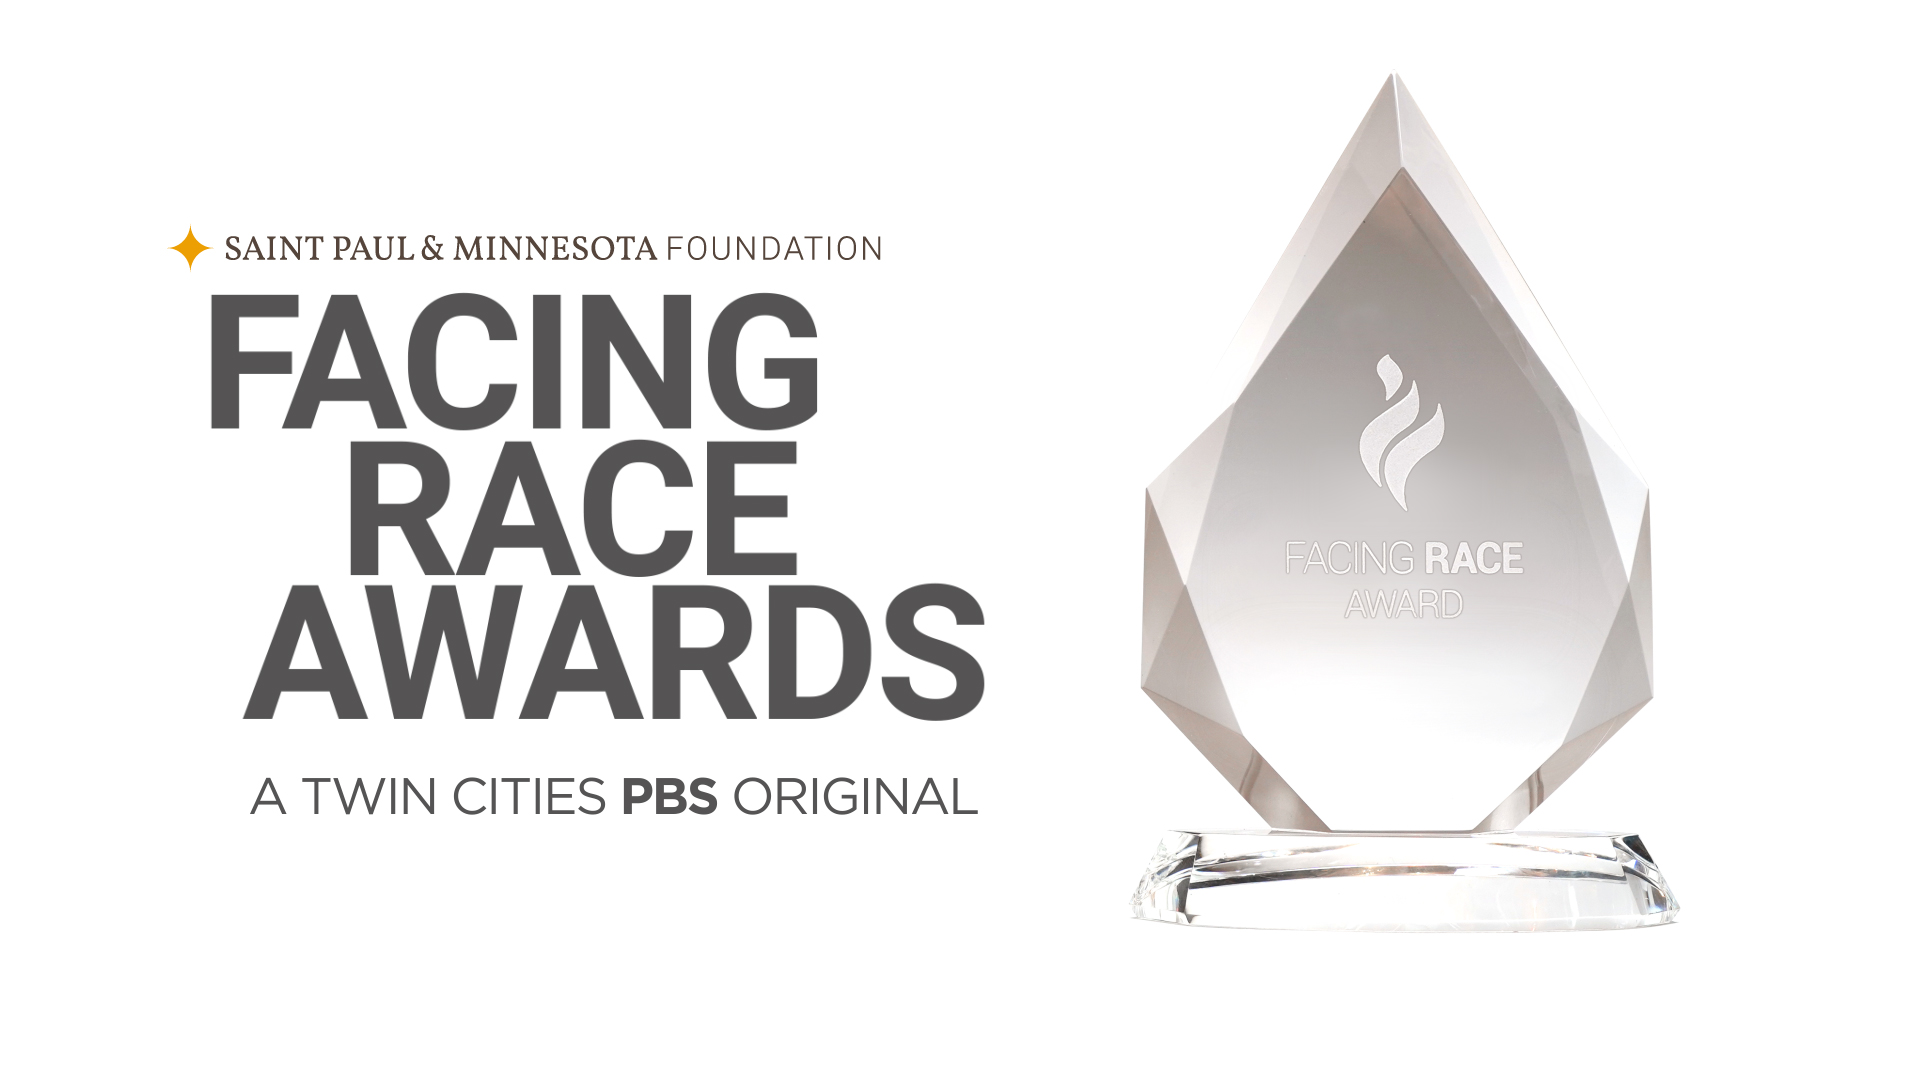 The Facing Race Awards - Twin Cities PBS